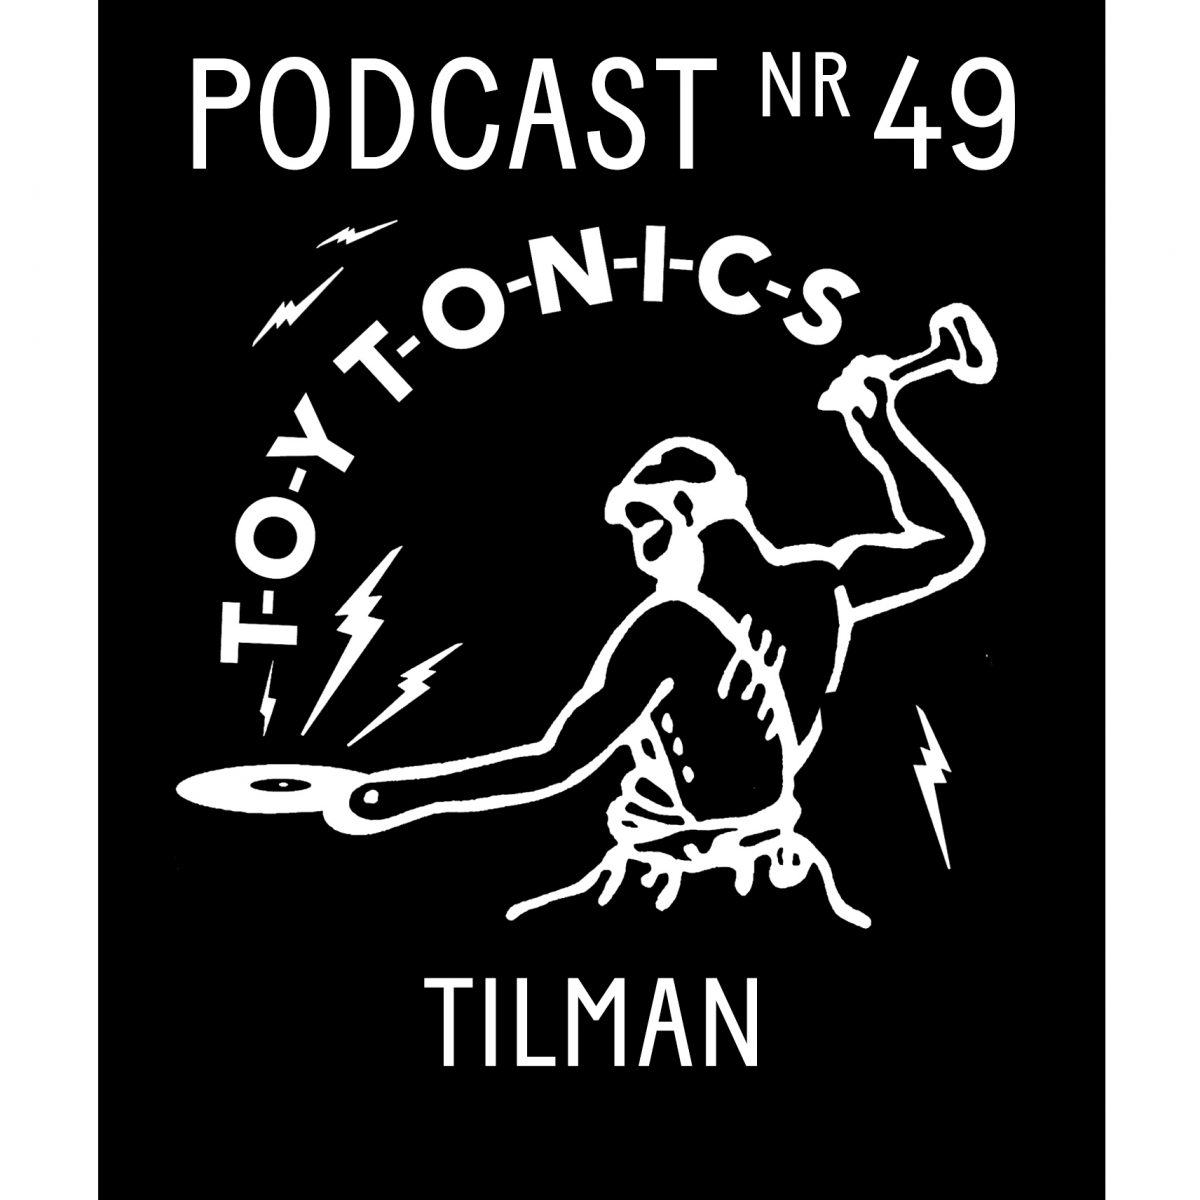 PODCAST NR 49 – Tilman